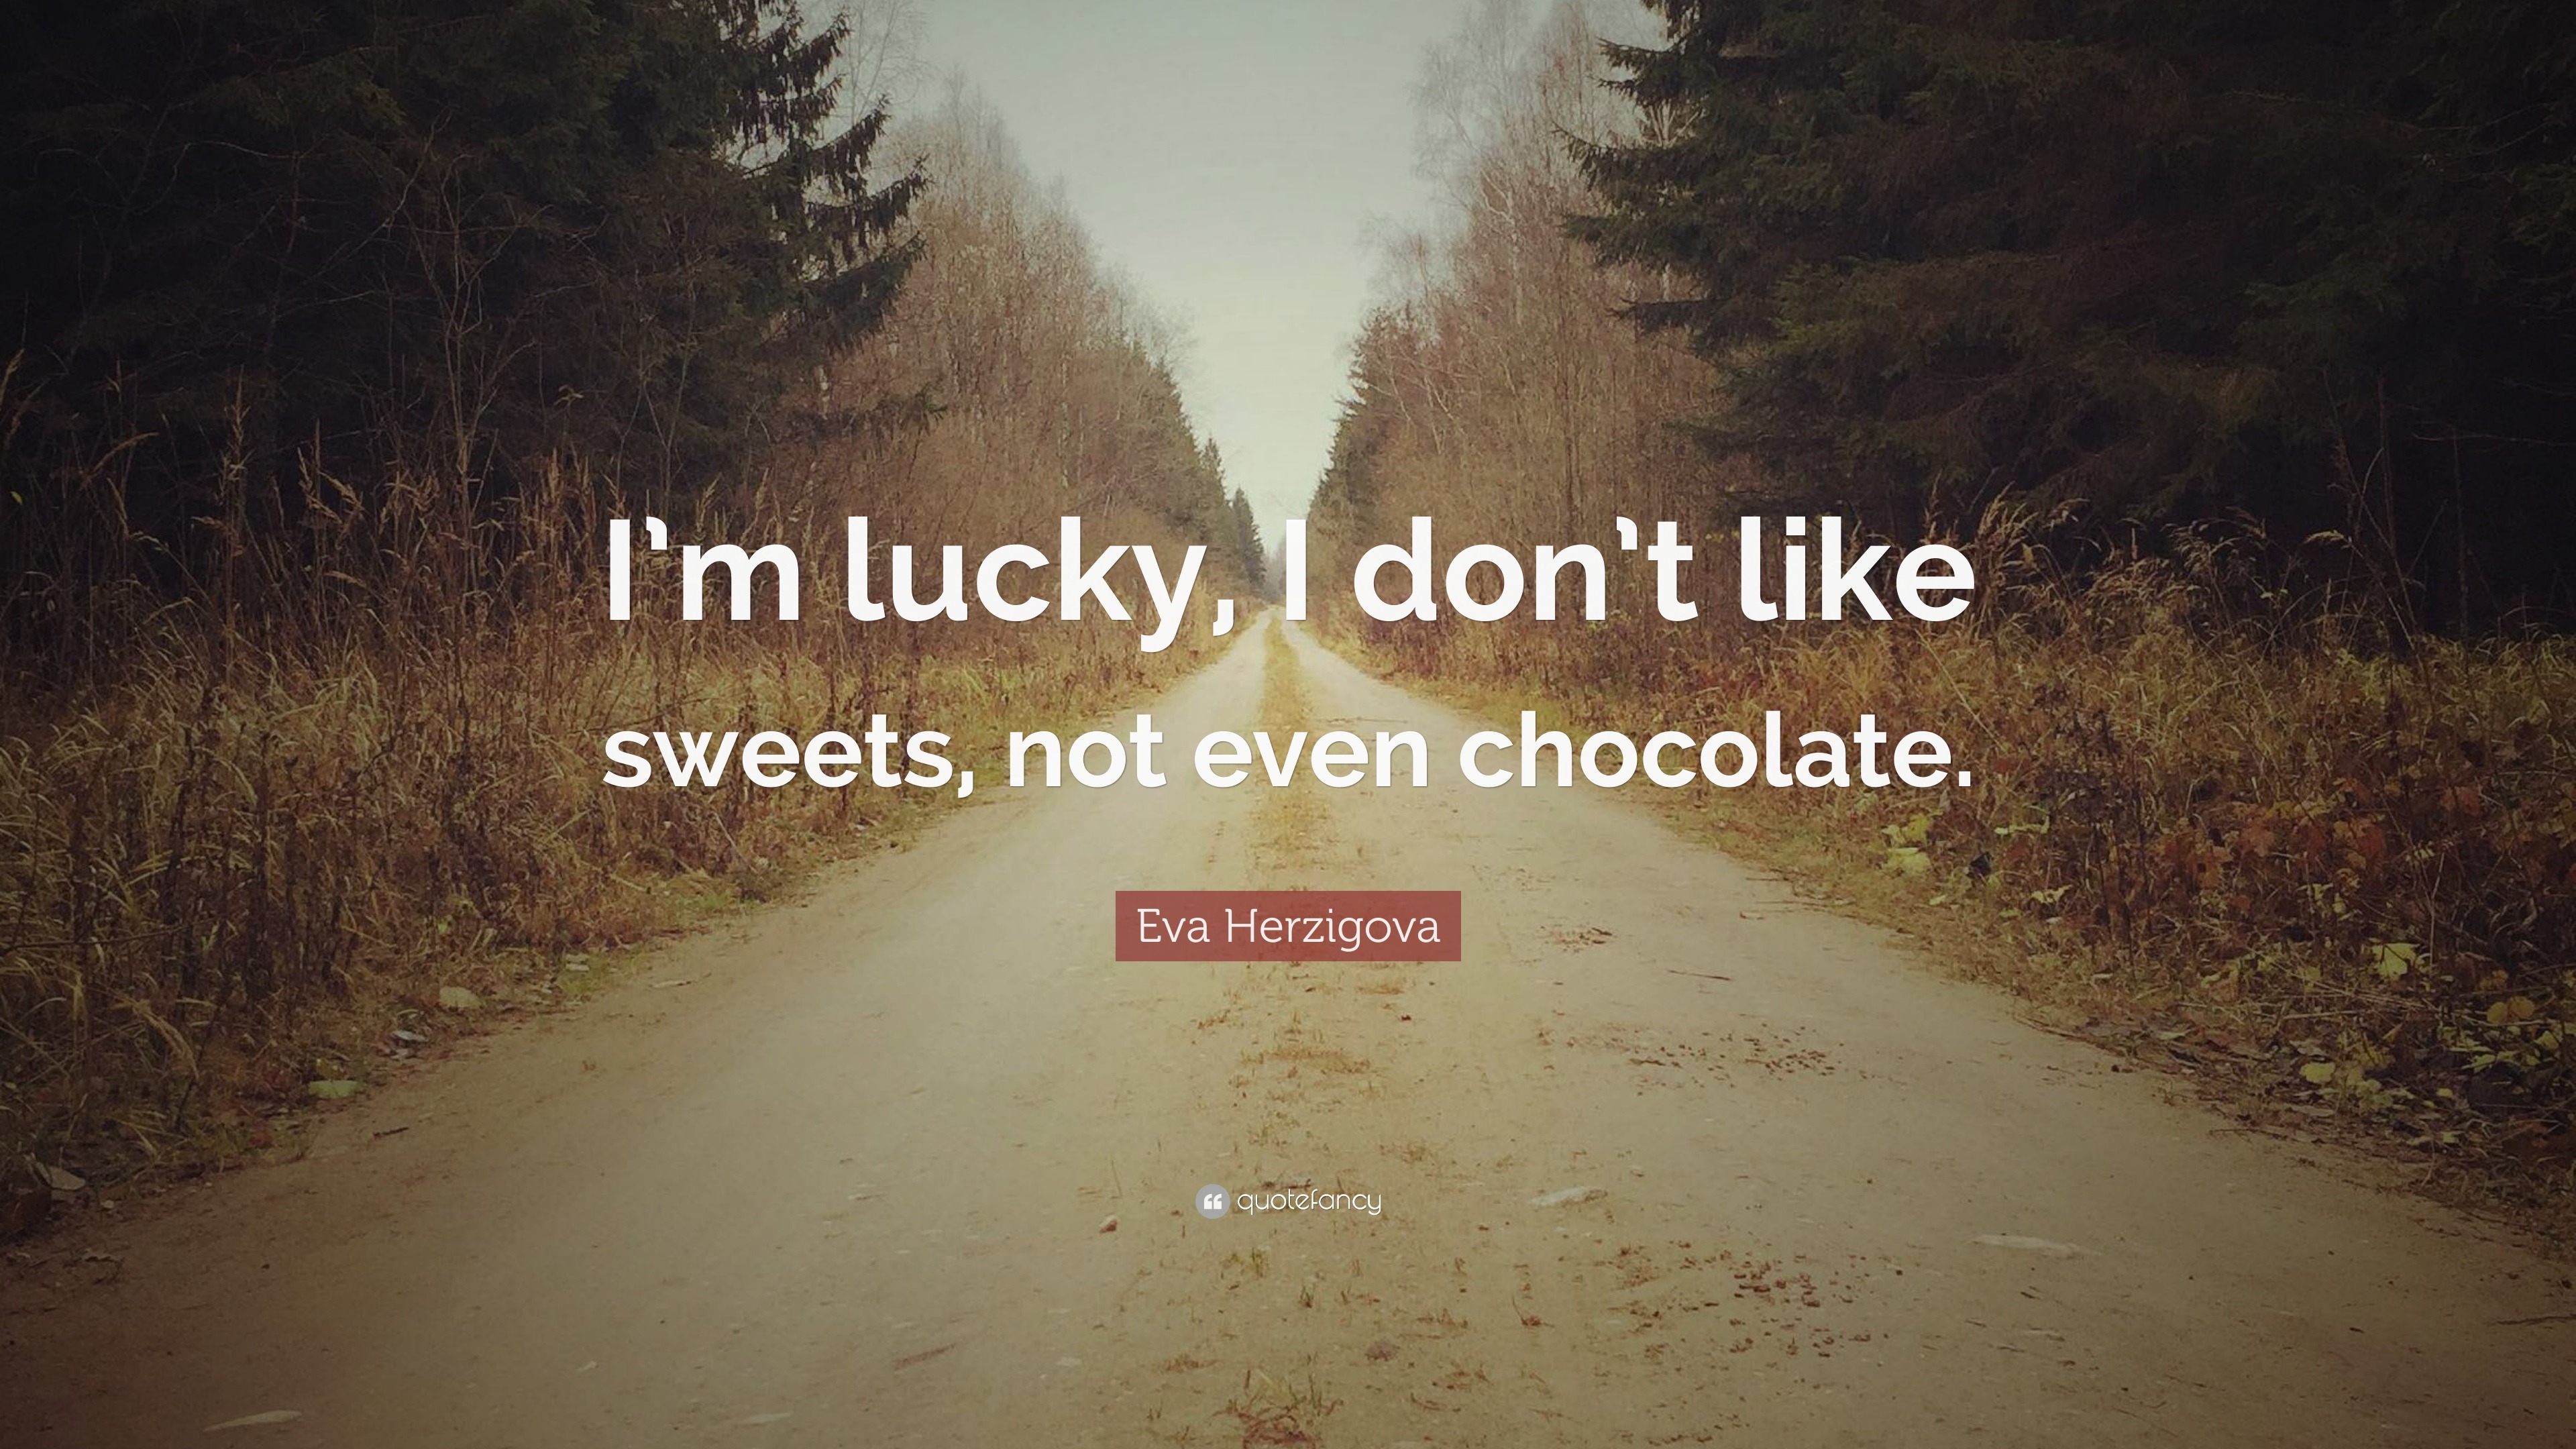 Eva Herzigova Quote: “I’m lucky, I don’t like sweets, not even chocolate.”